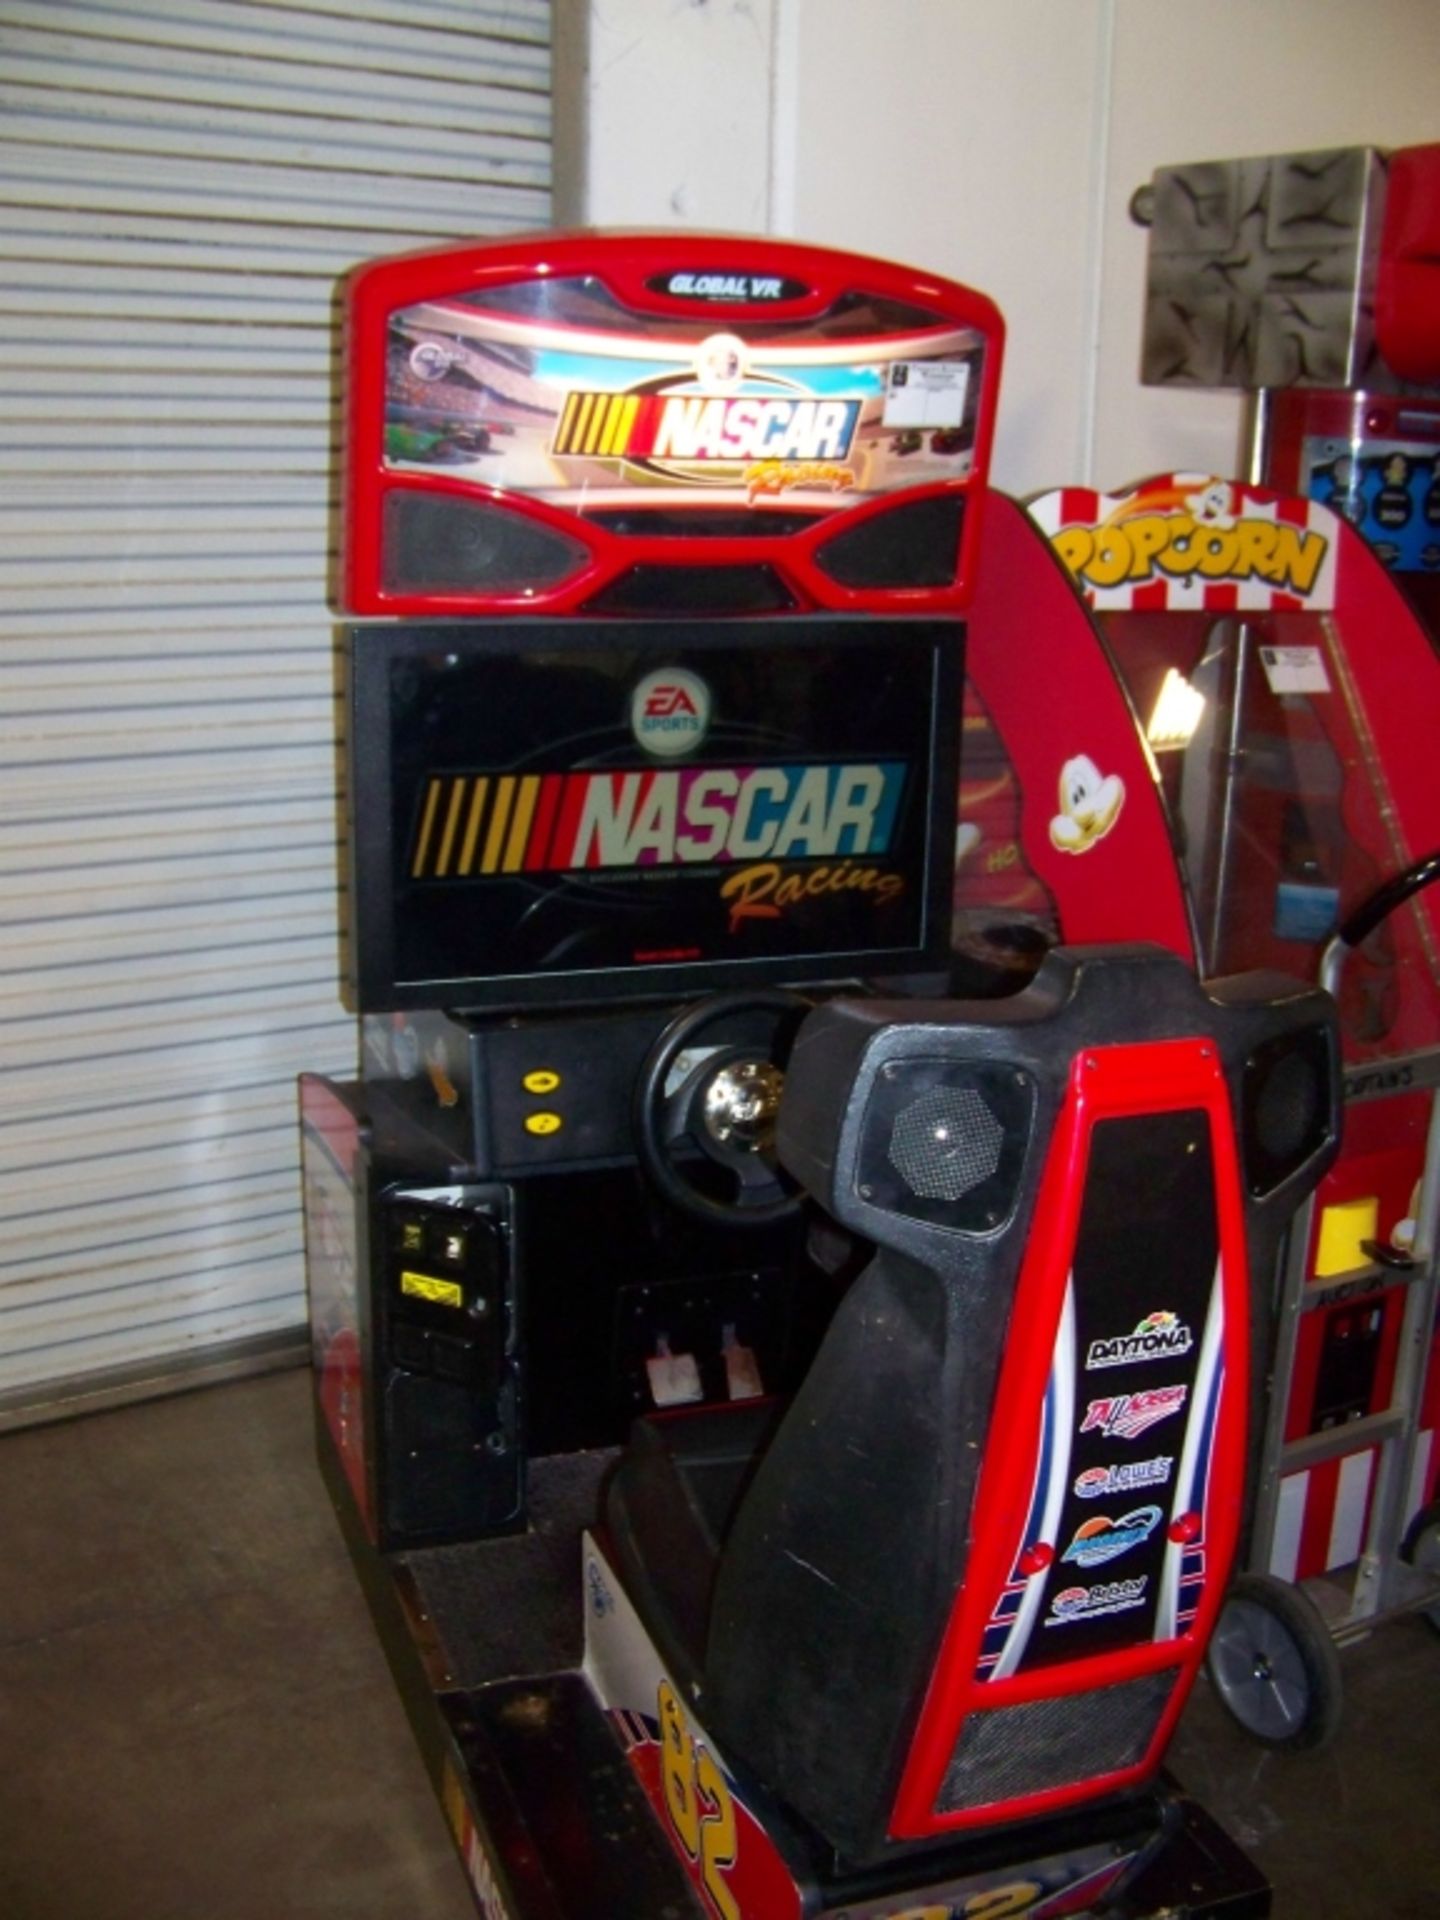 NASCAR RACING ARCADE GAME GLOBAL VR 32" LCD - Image 3 of 7